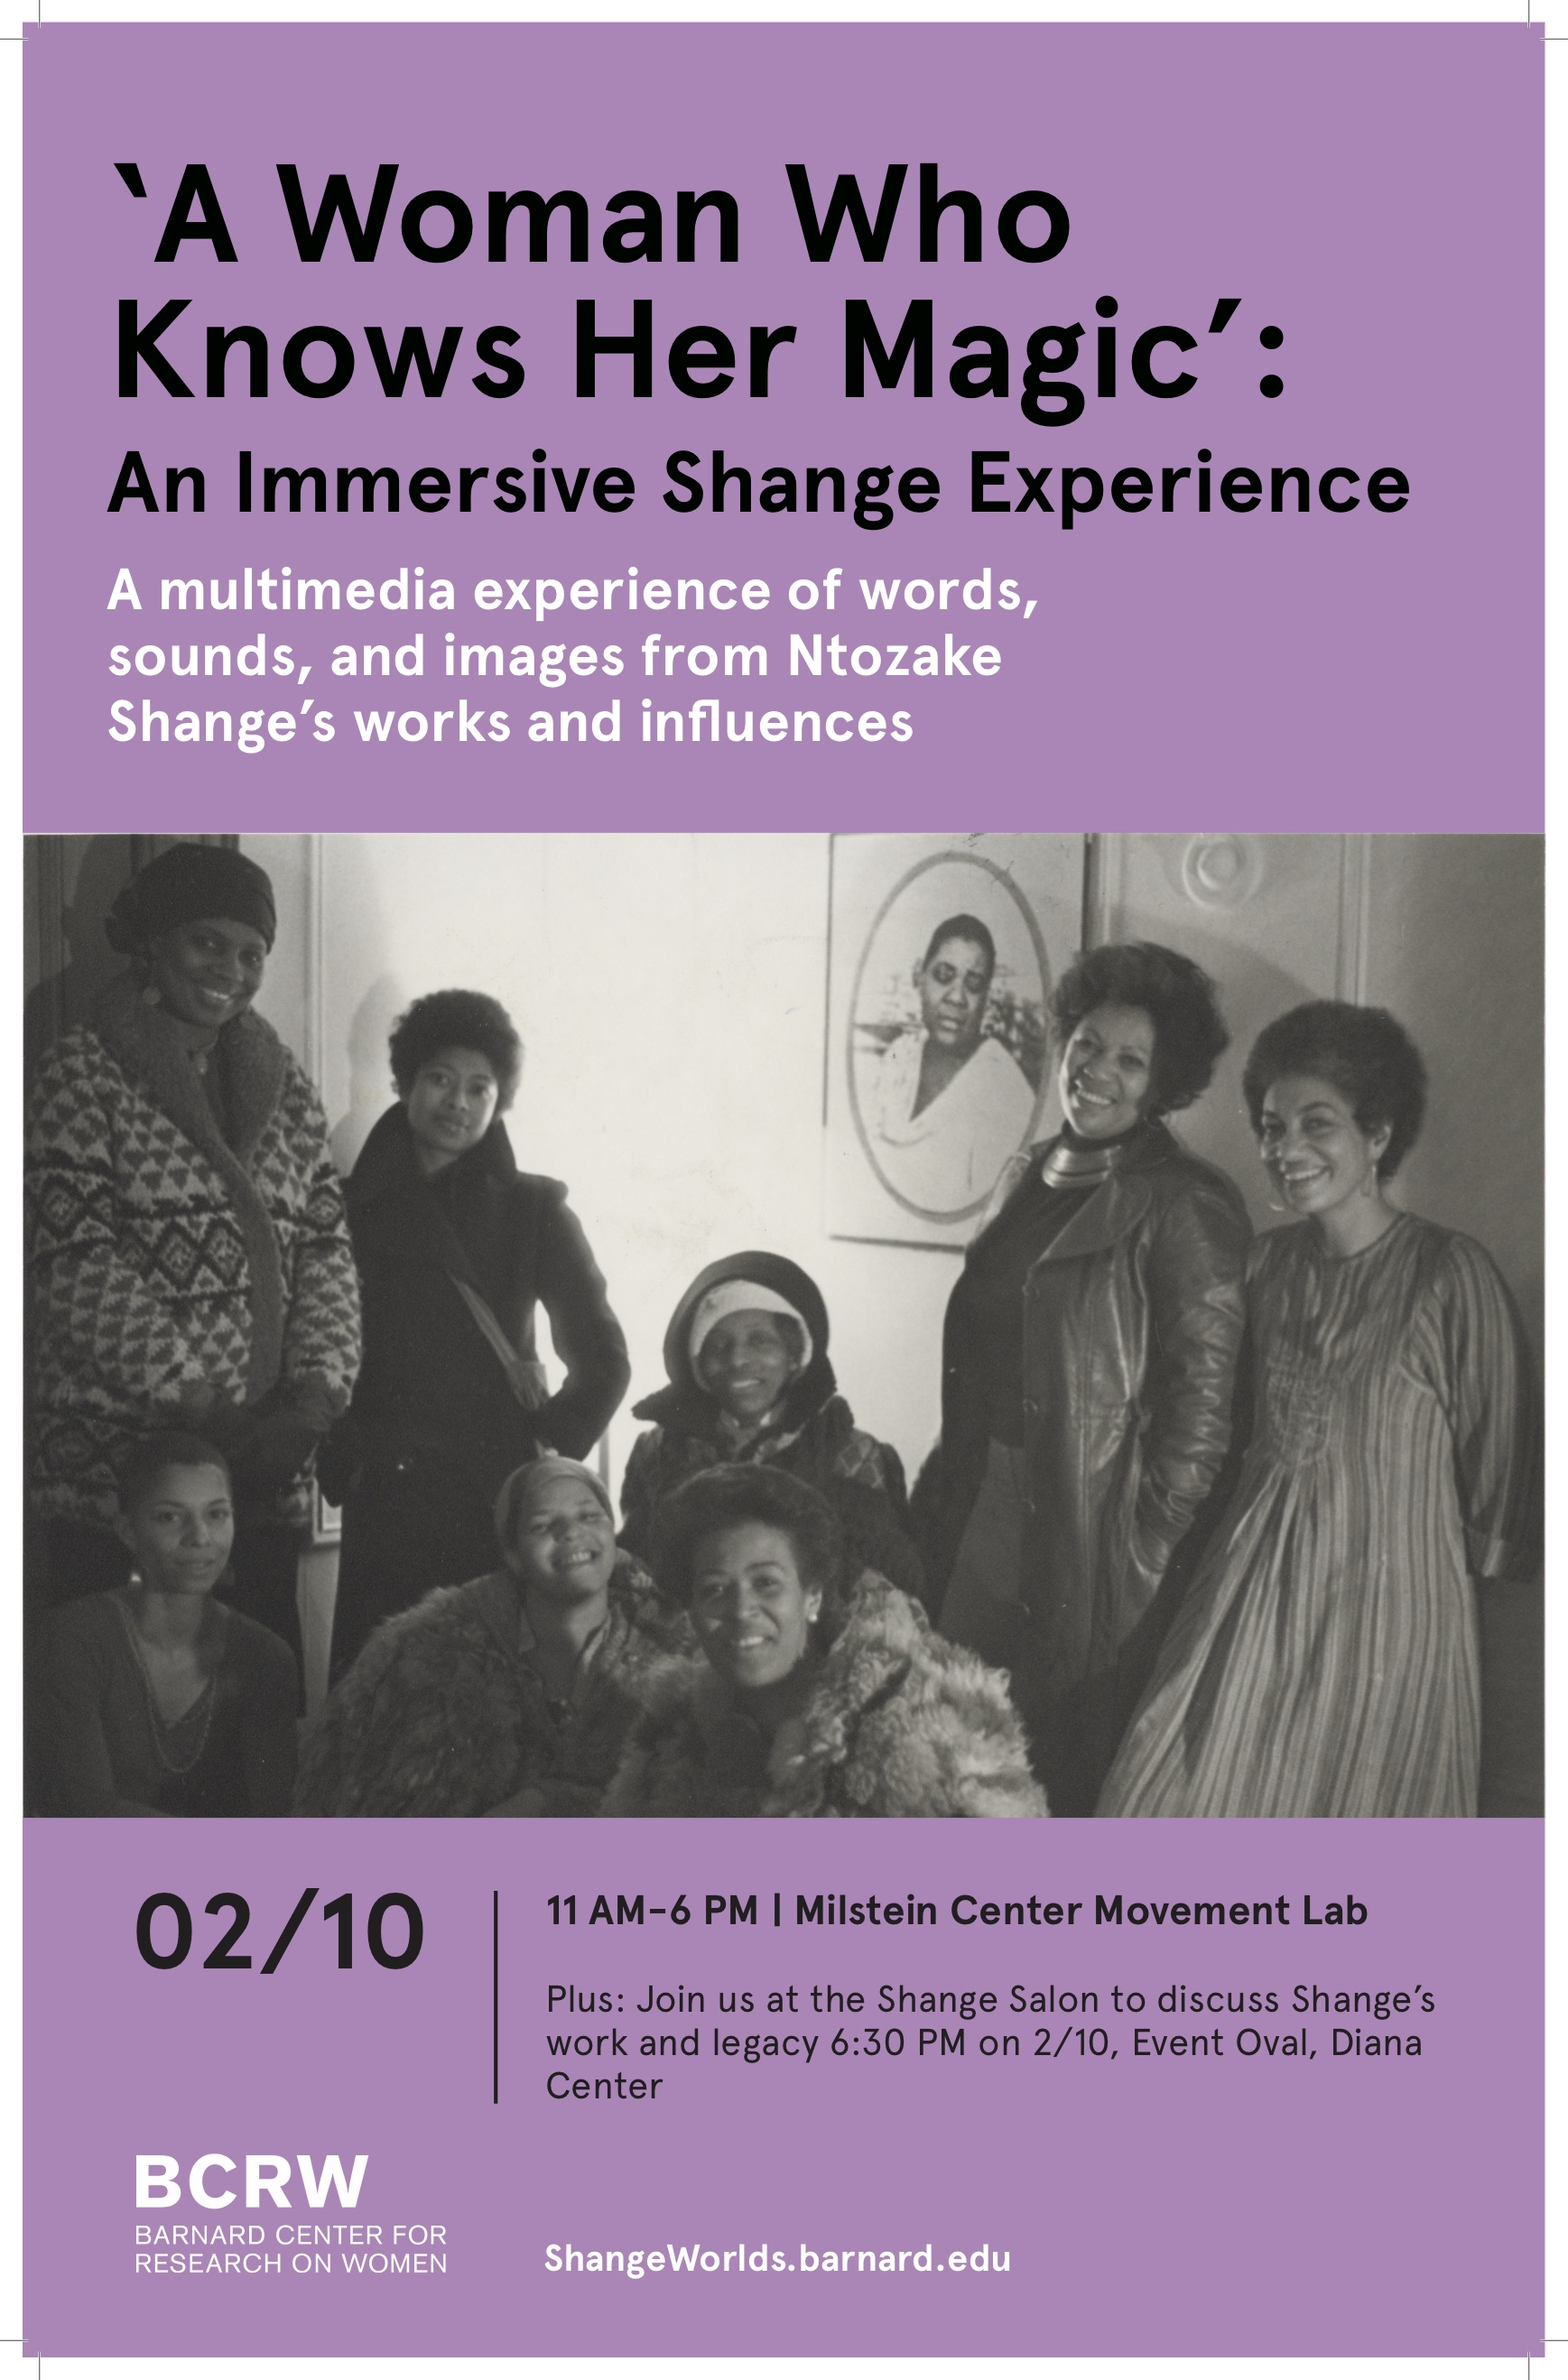 Shange Movement Lab Event Poster